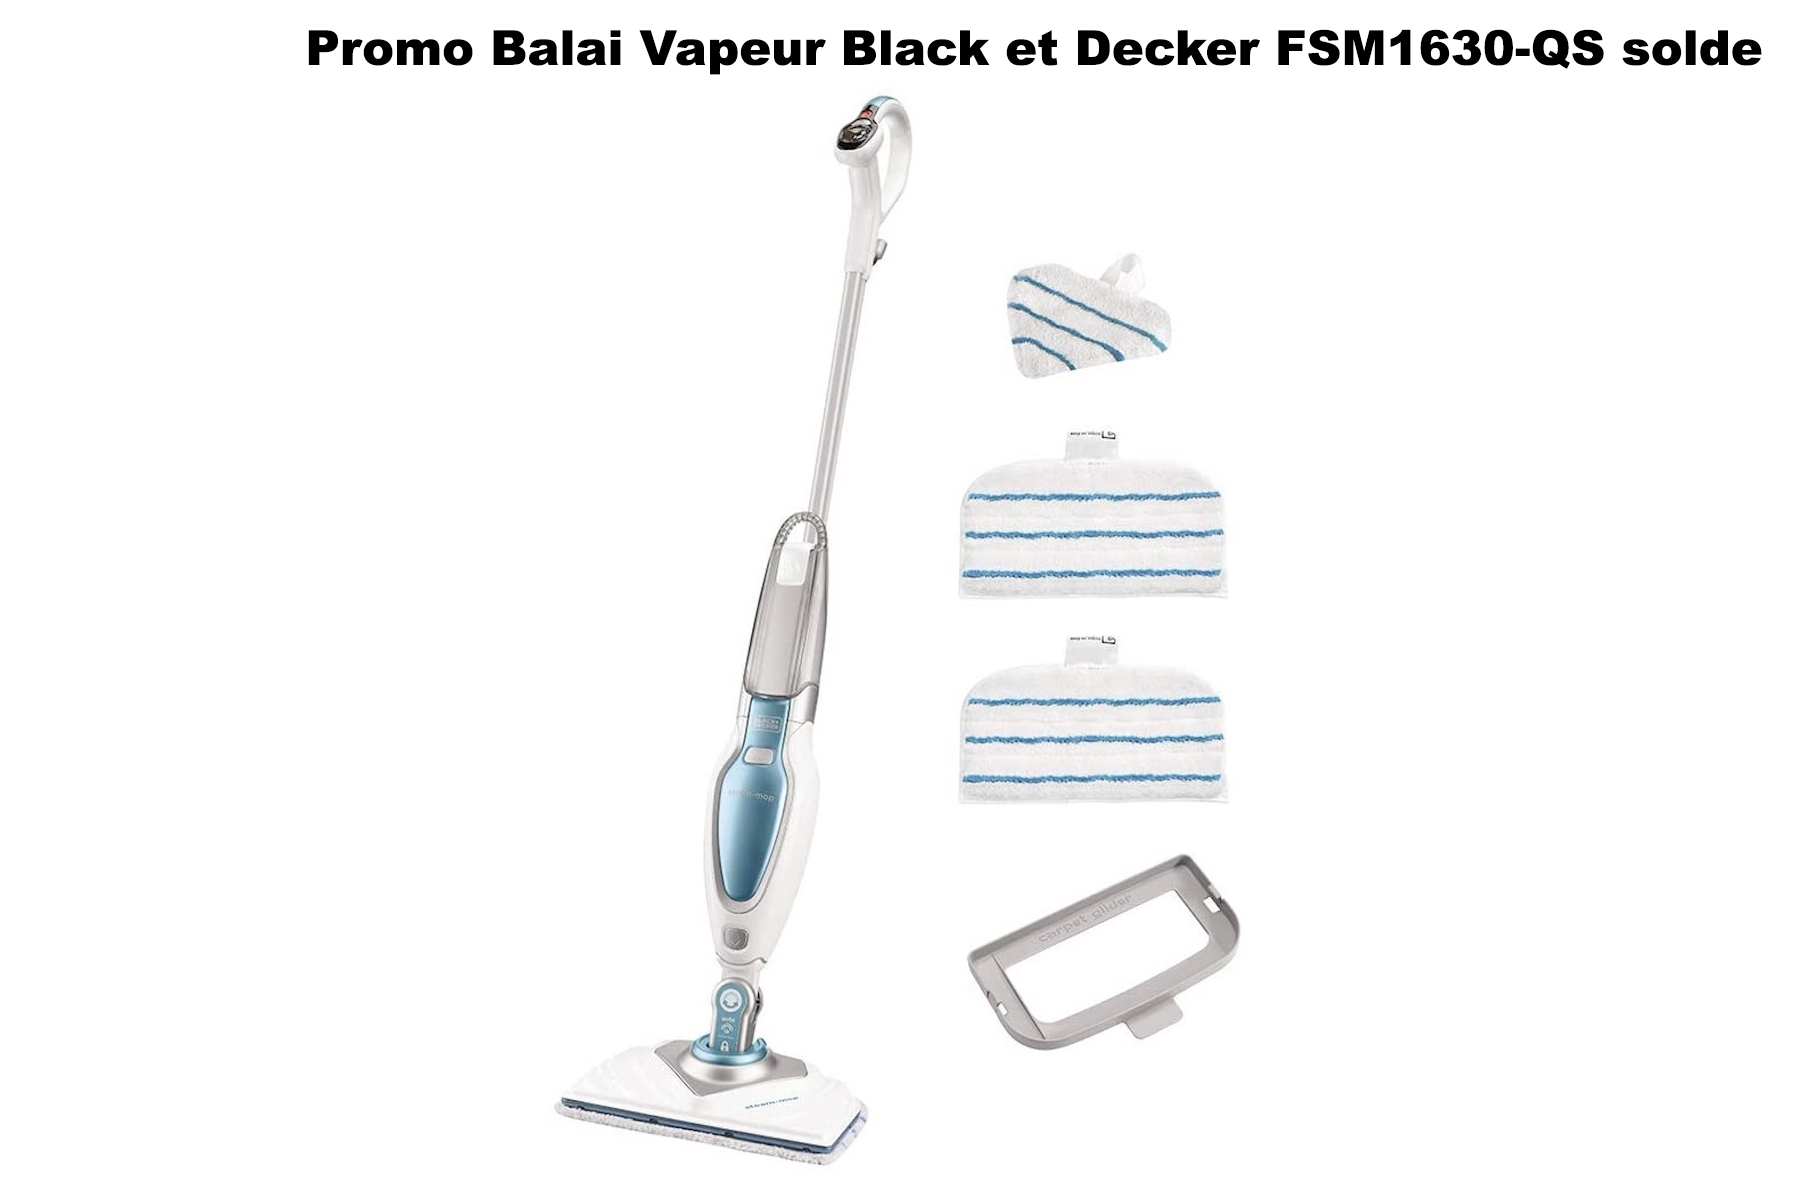 Balai Vapeur Black and Decker FSM1630-QS en promo prix en solde